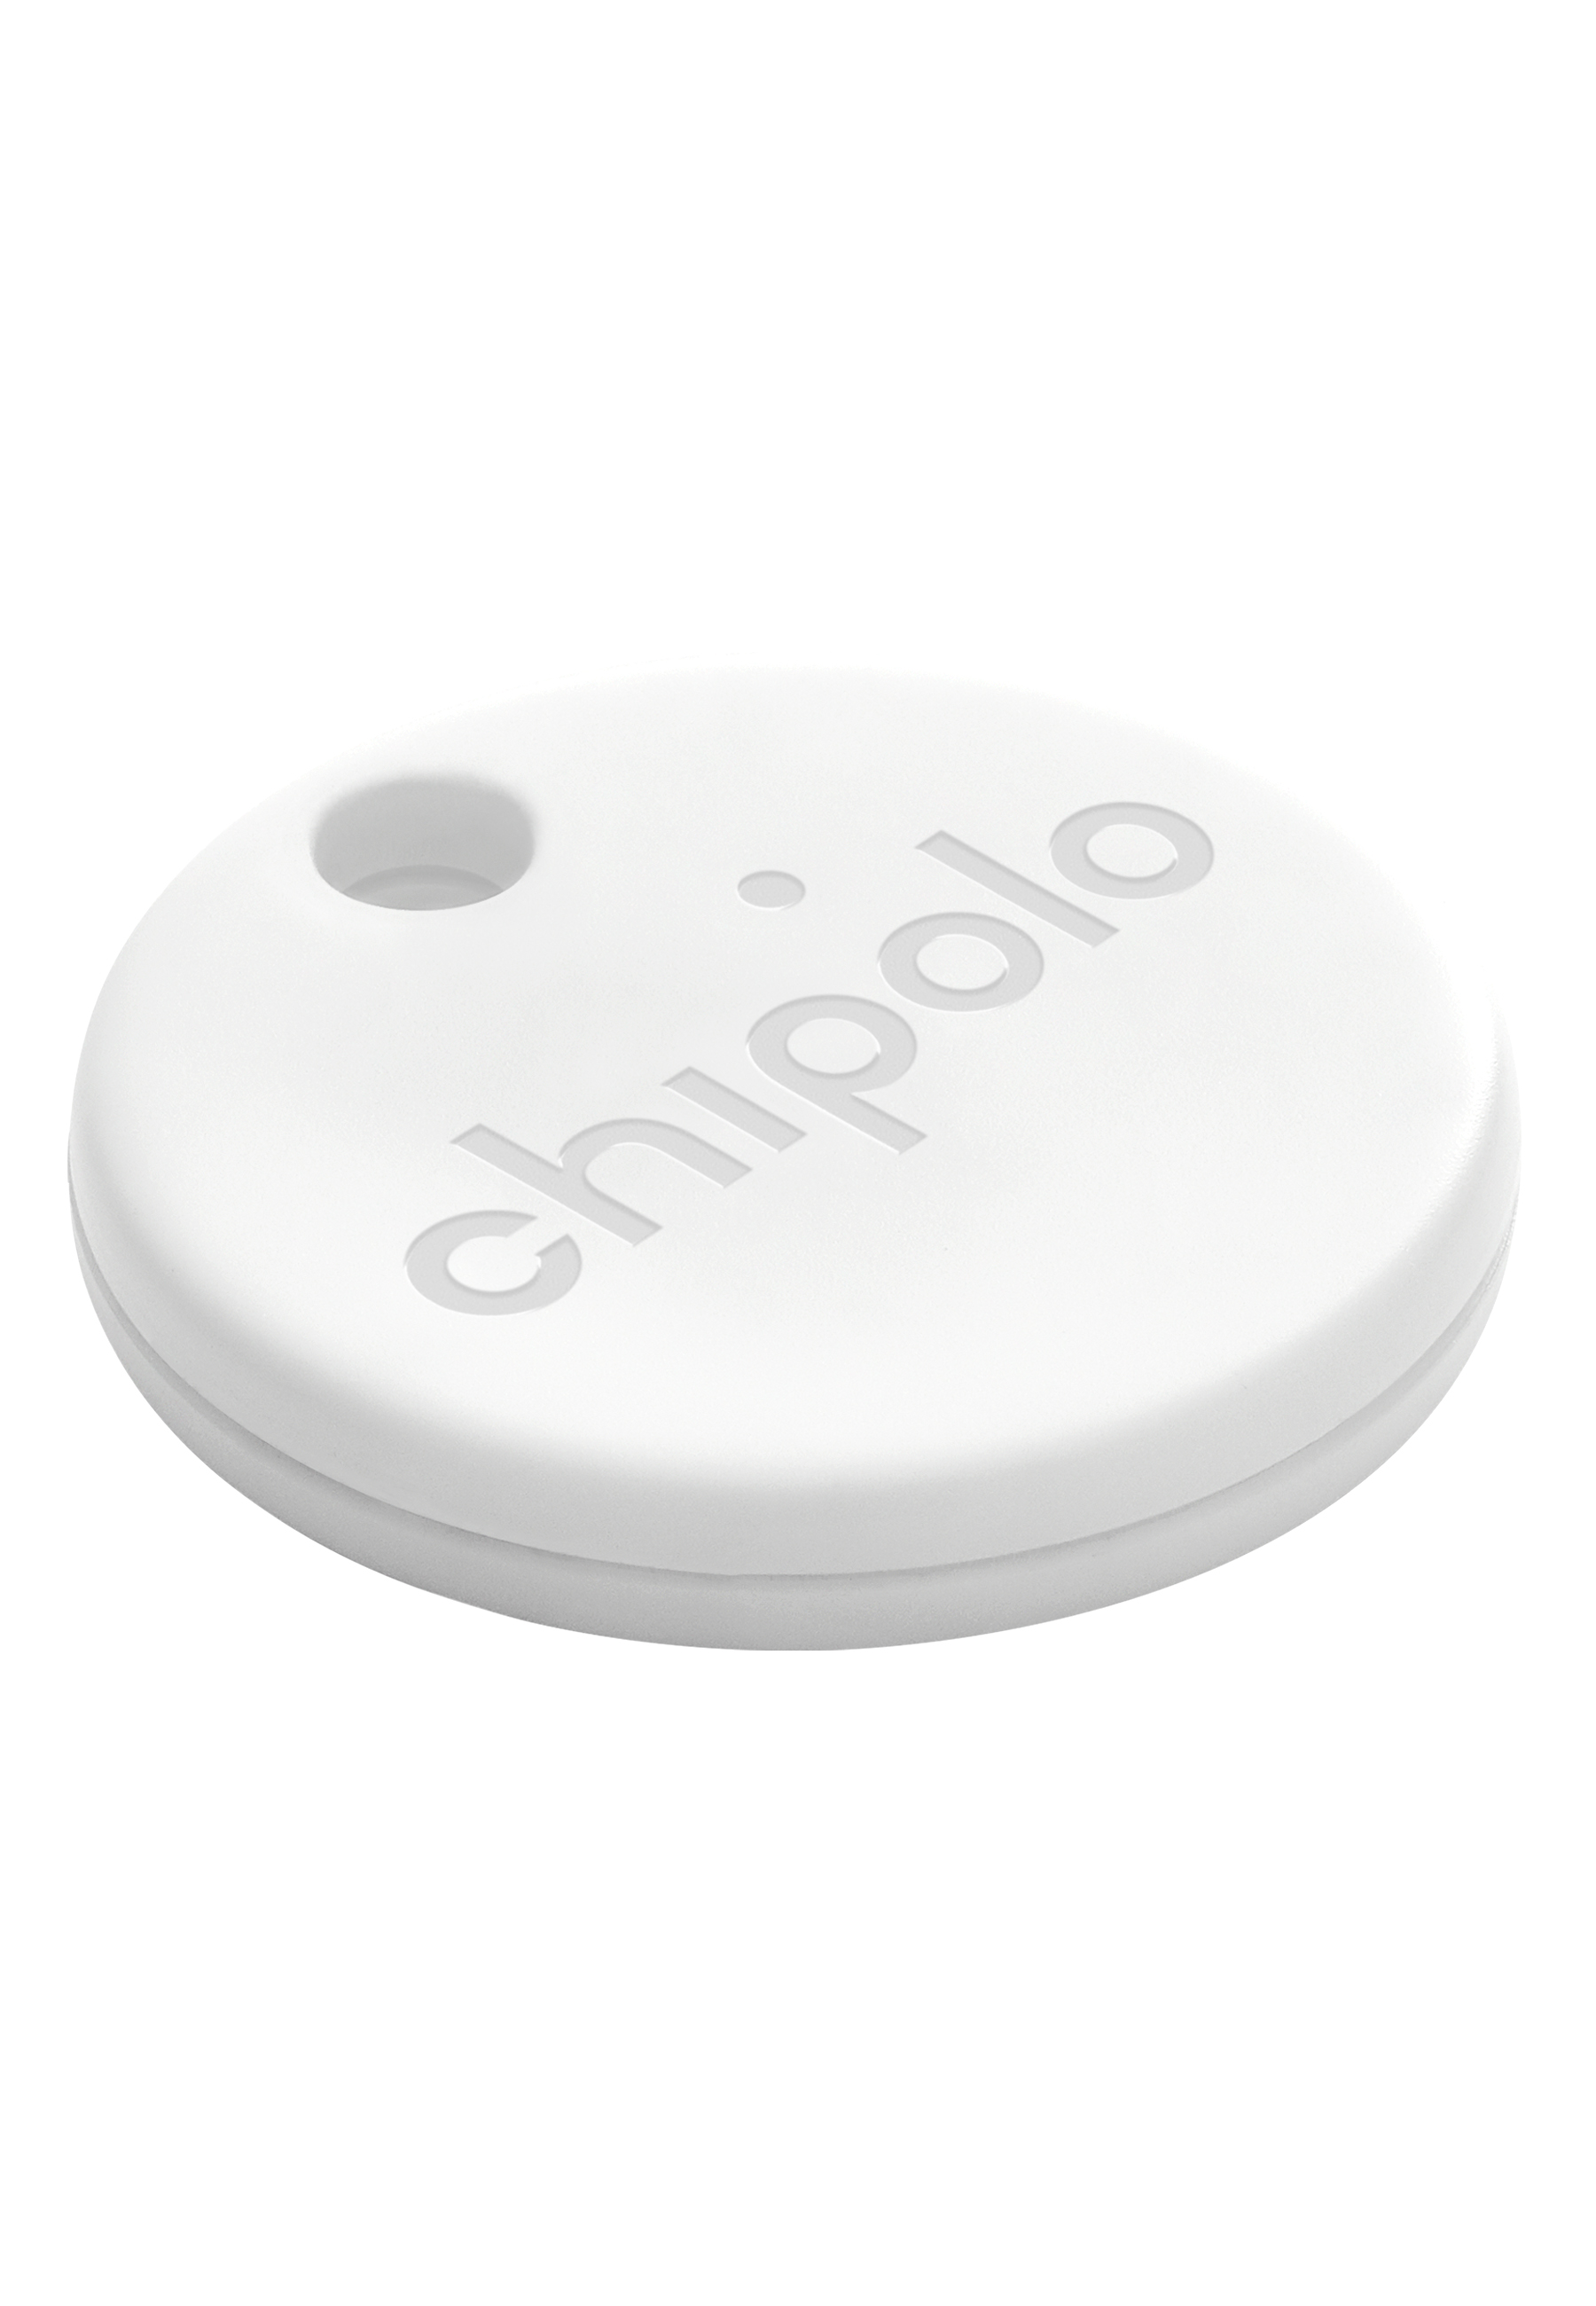 -WE-R CHIPOLO Tracker Bluetooth